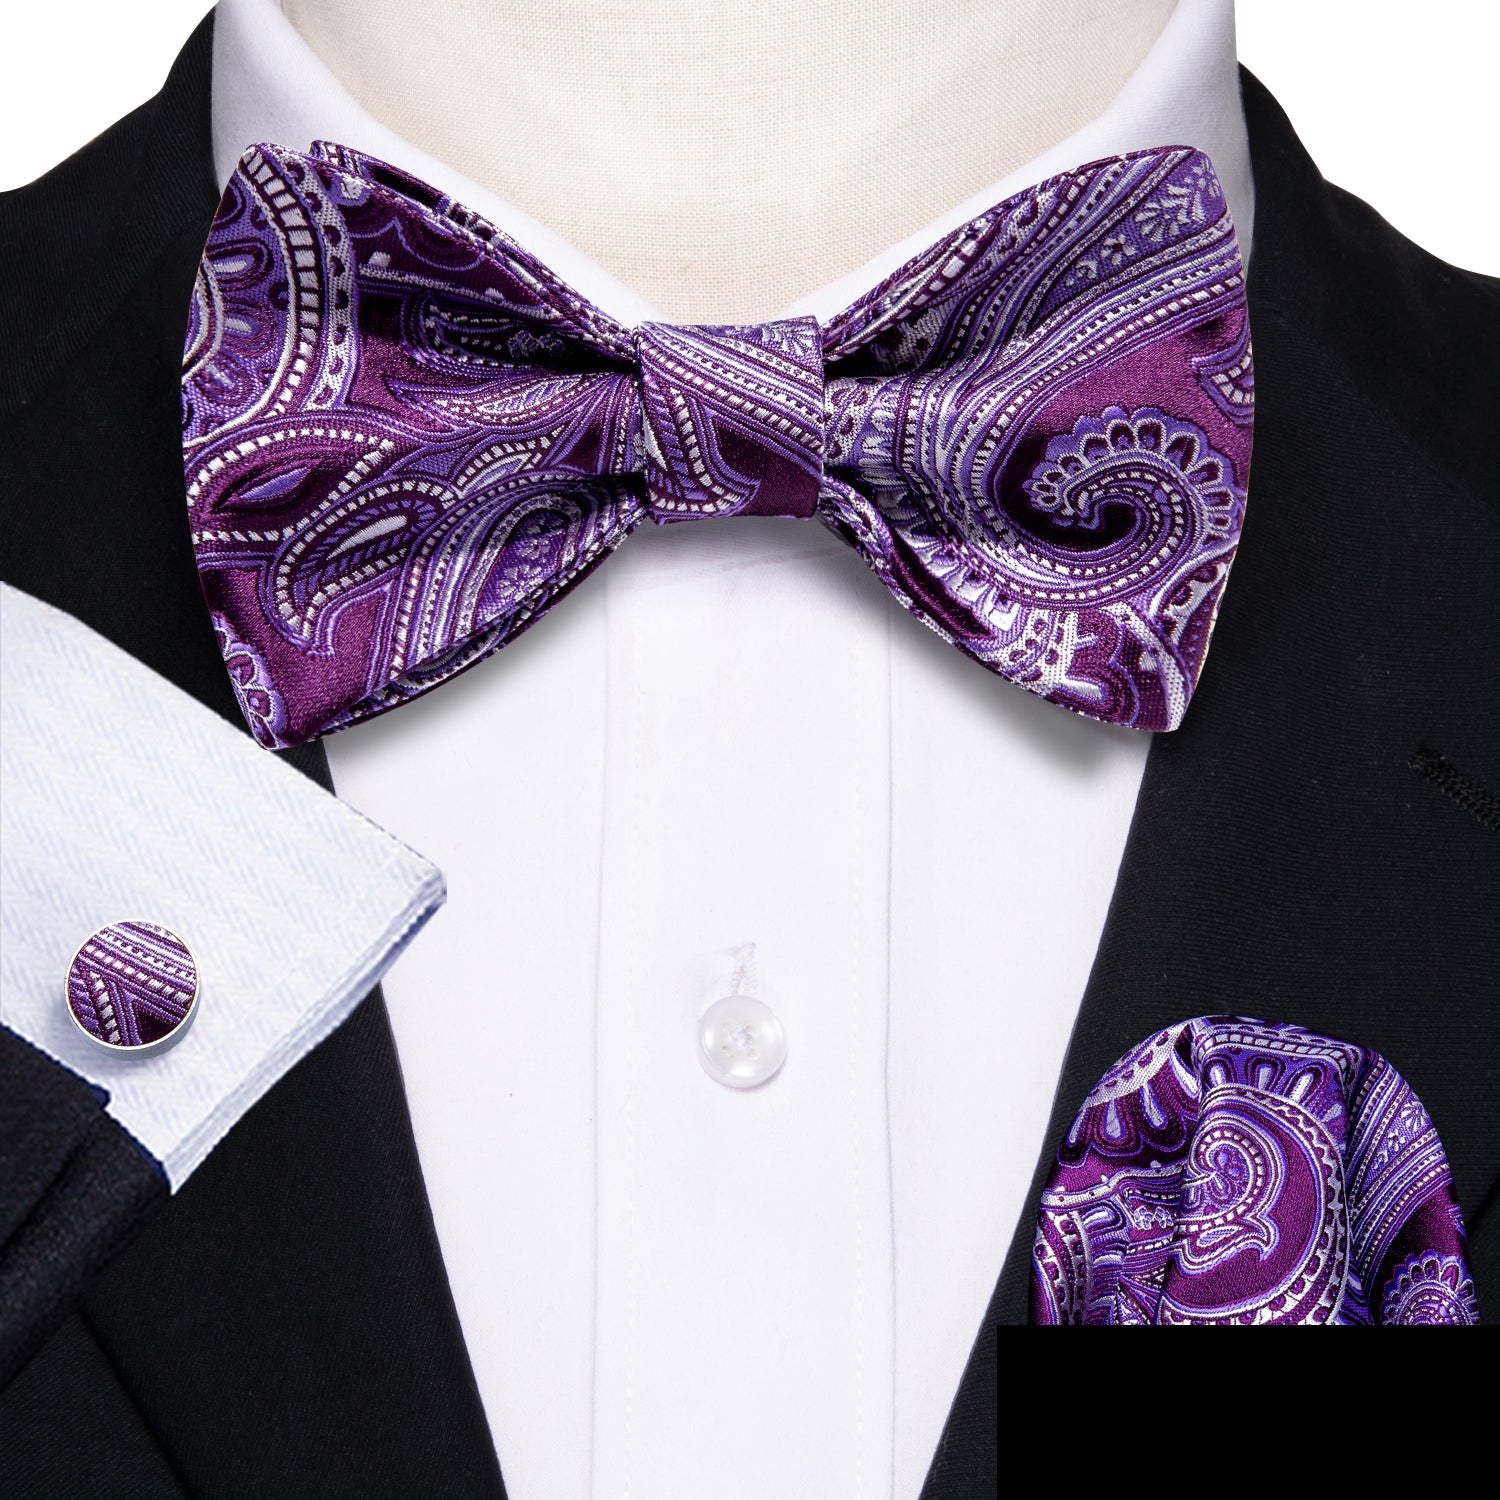 Barry.wang Purple Tie Paisley Self Tie Bow Tie Hanky Cufflinks Set Classic Hot